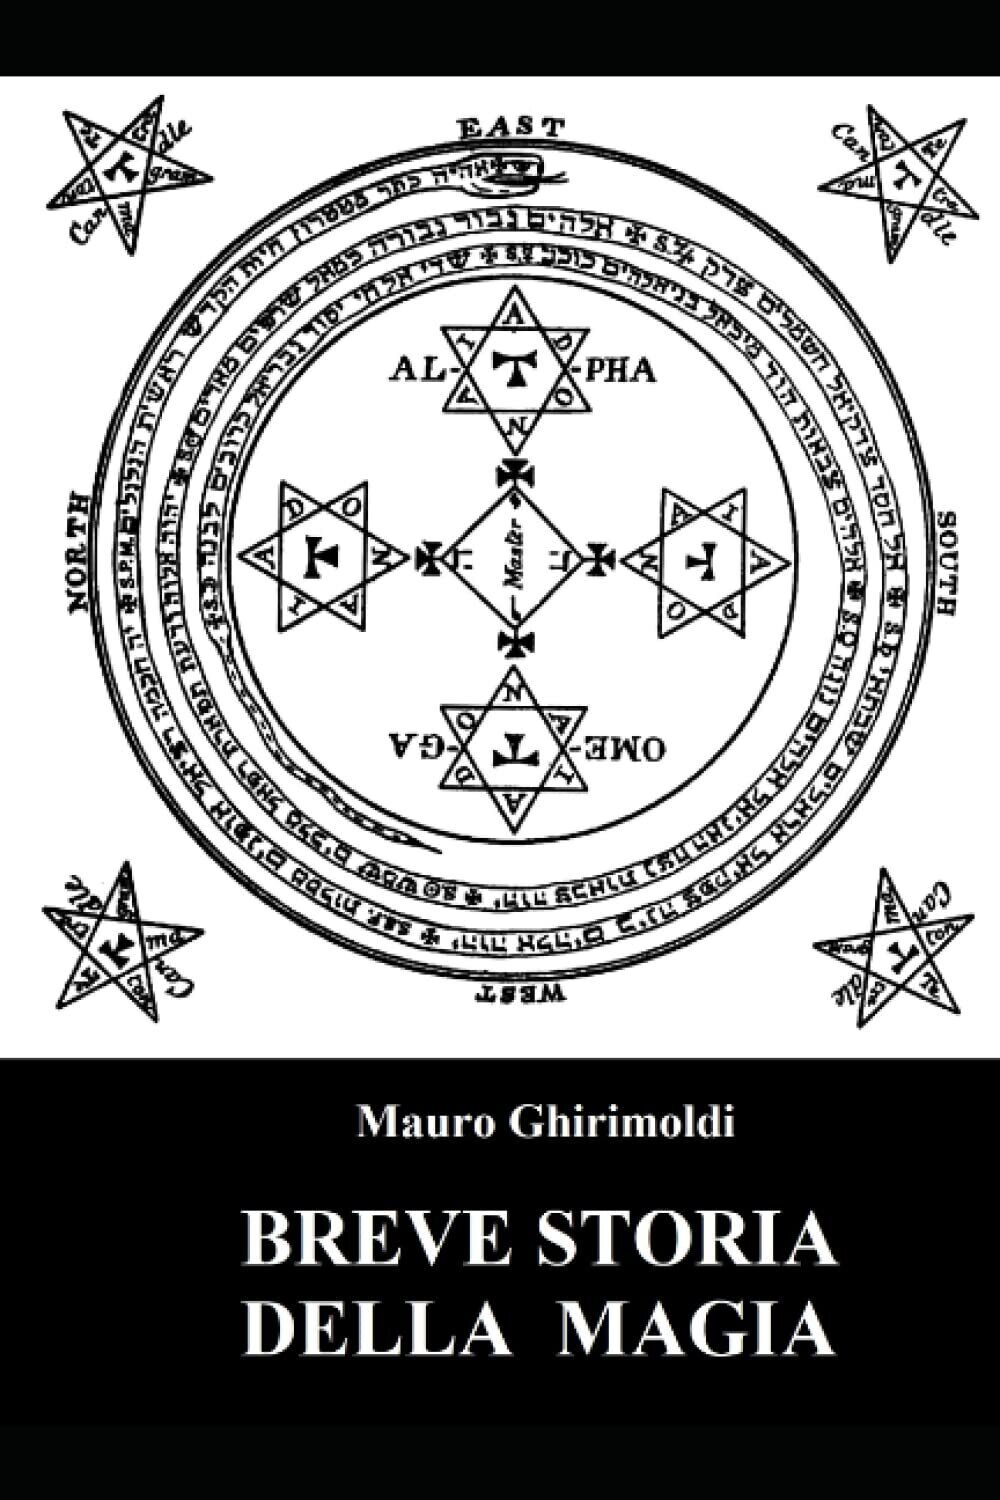 Breve storia della magia - Mauro Ghirimoldi - Independently published, 2022